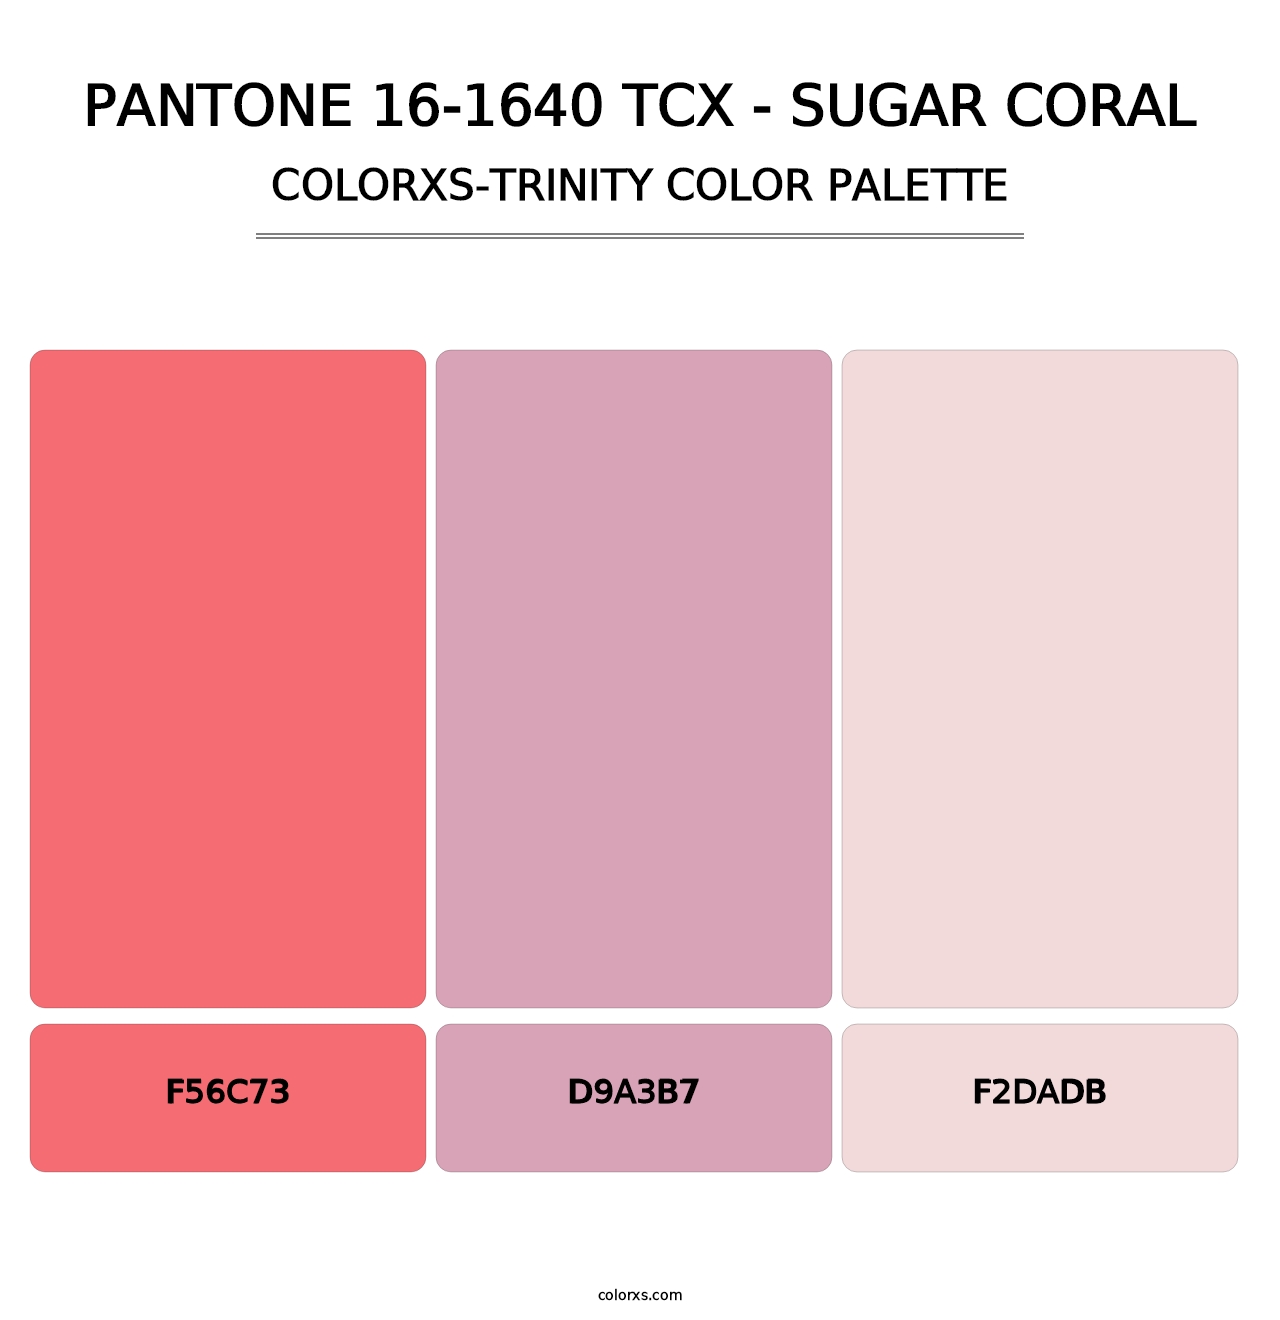 PANTONE 16-1640 TCX - Sugar Coral - Colorxs Trinity Palette